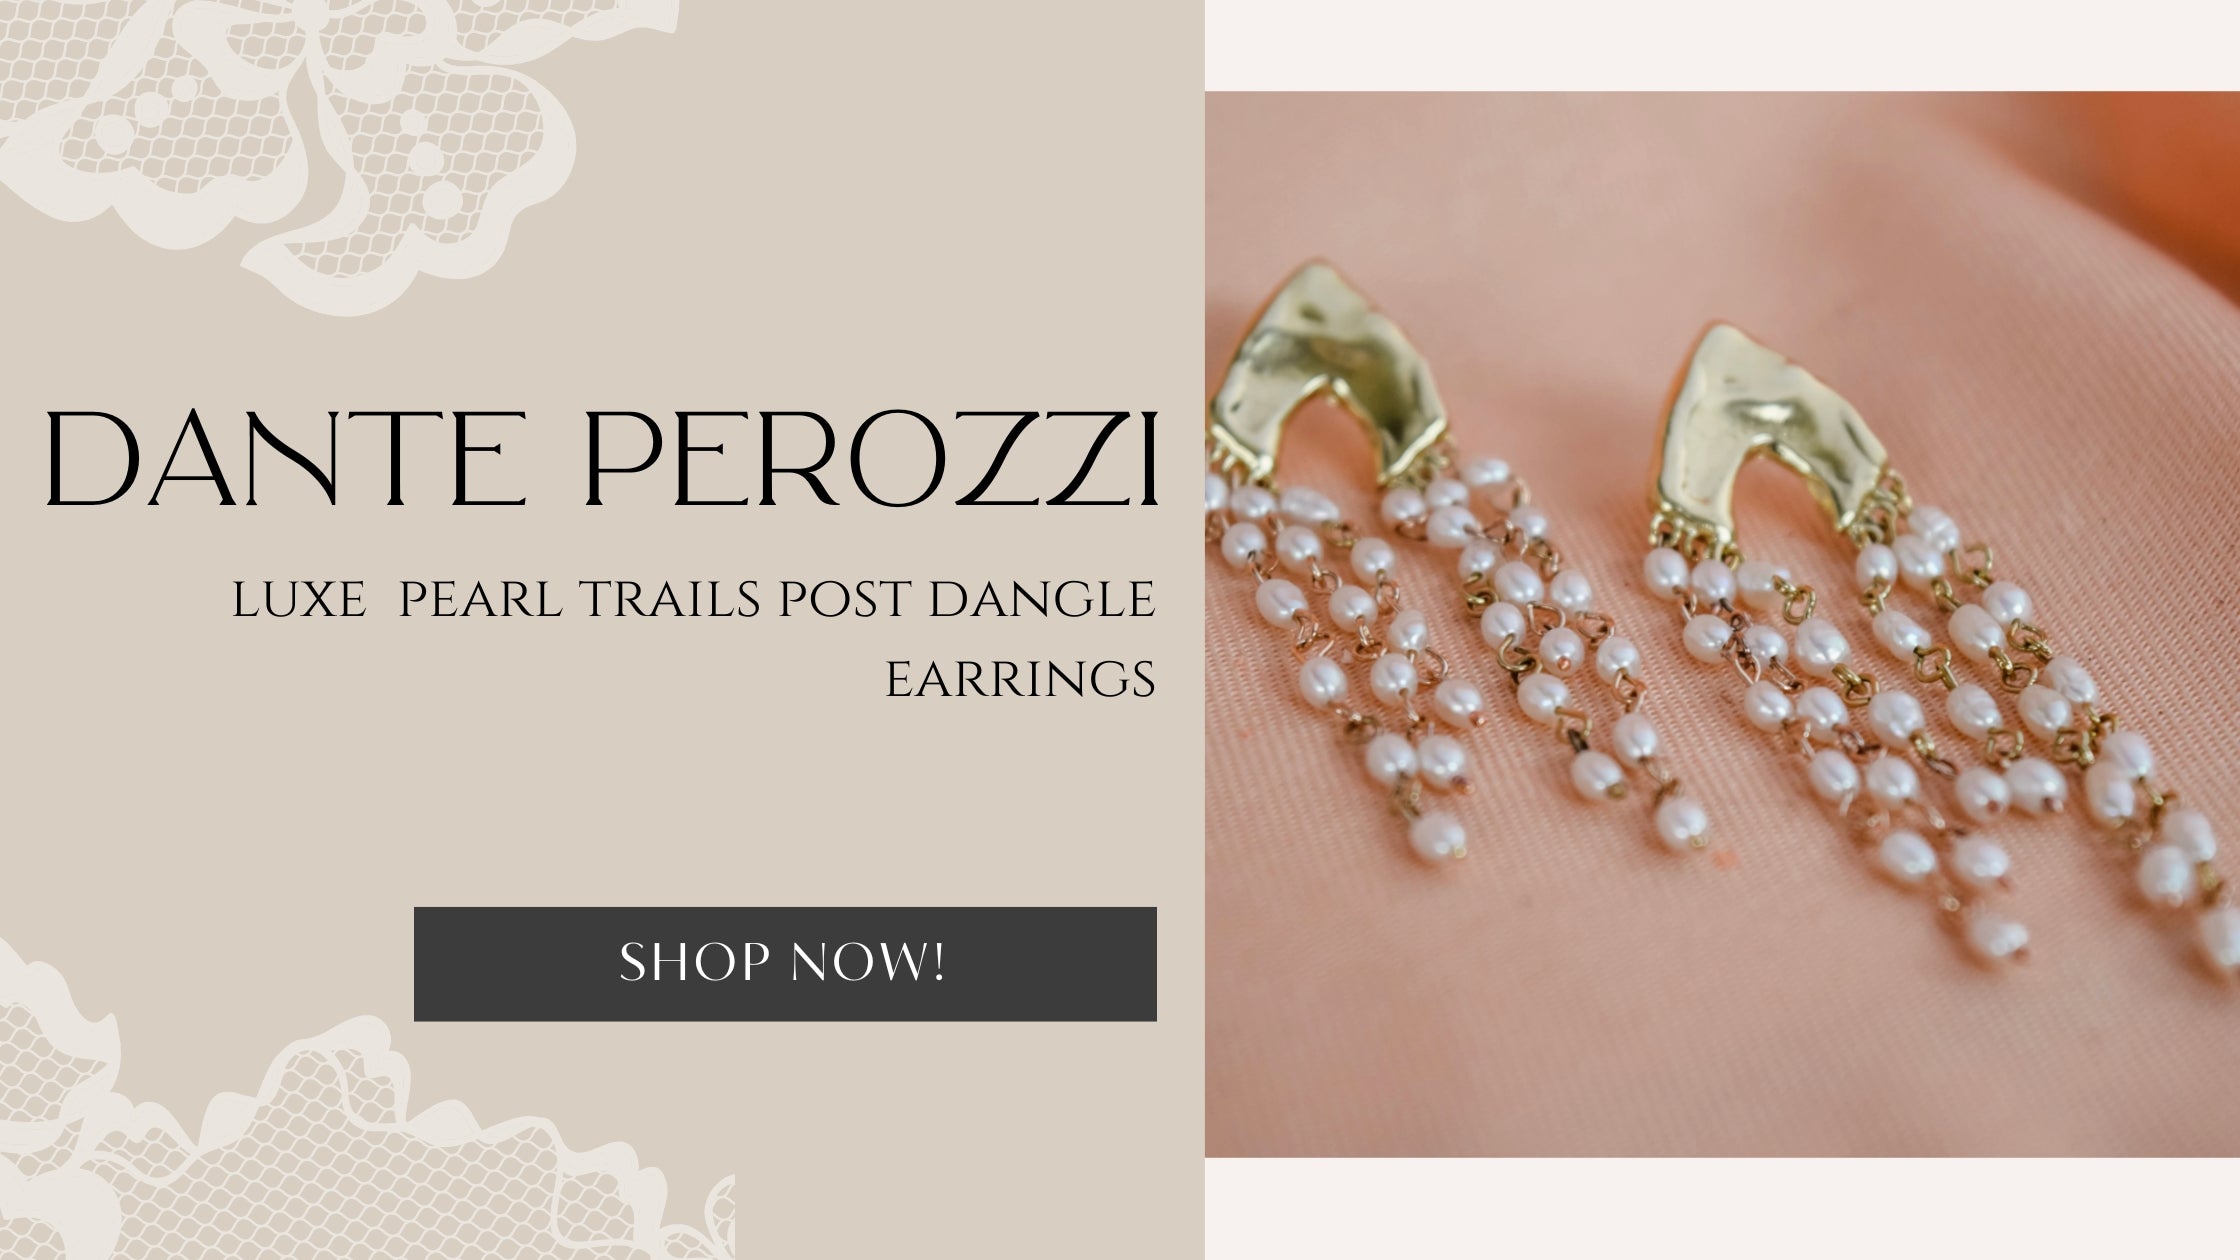 Dante Perozzi Pearl Trails Post Dangle Earrings